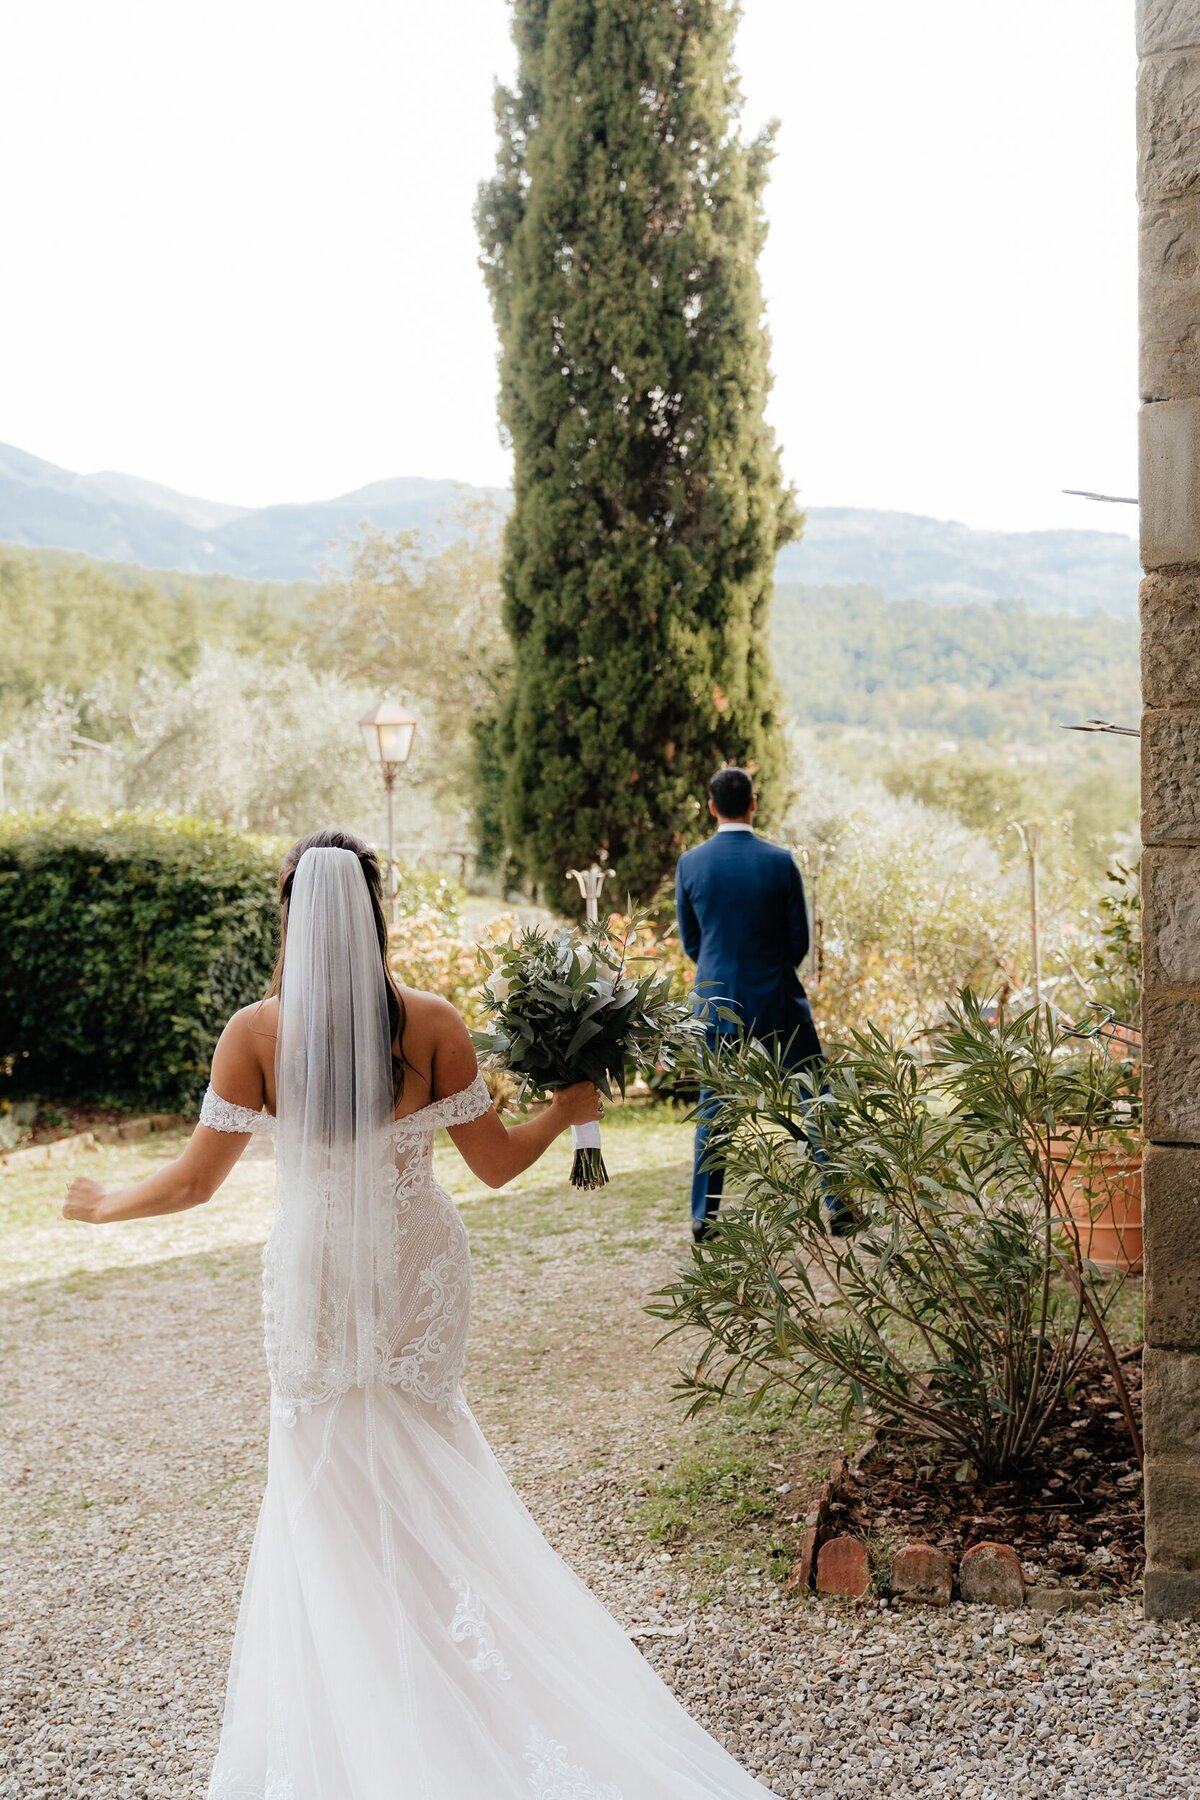 Pete-and-Brenna-Tuscany-Italy-Destination-Wedding-24